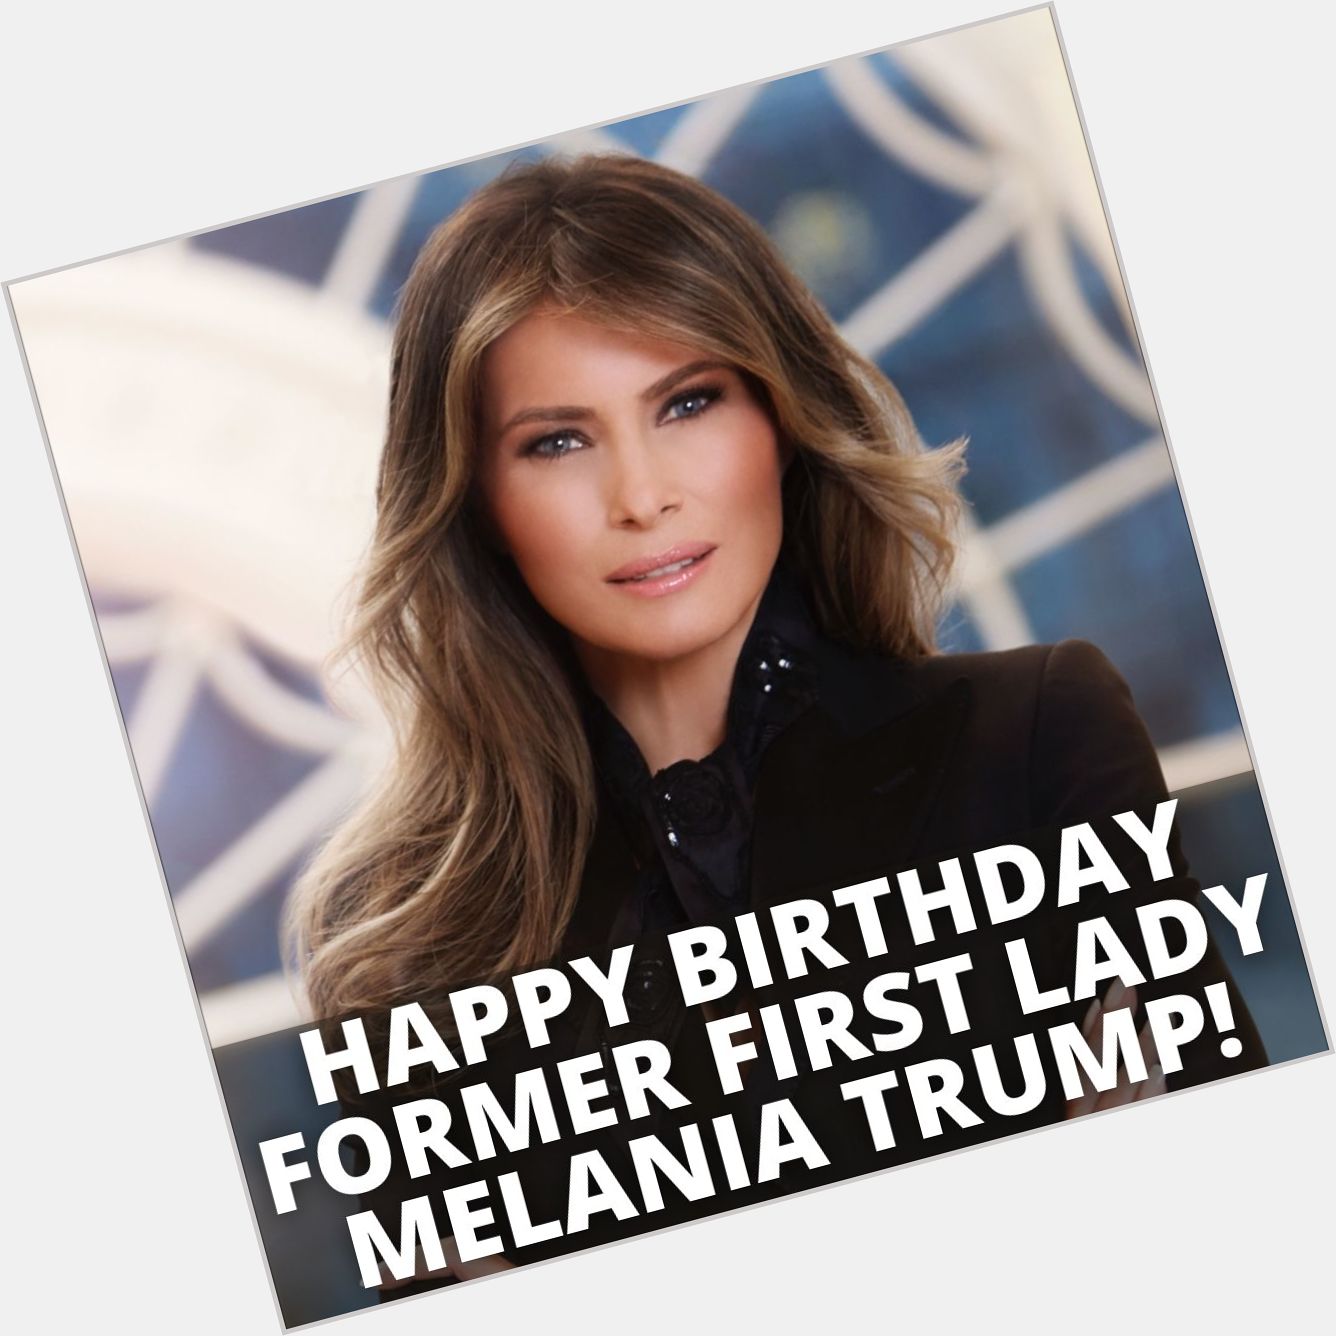 Happy Birthday to former First Lady Melania Trump 